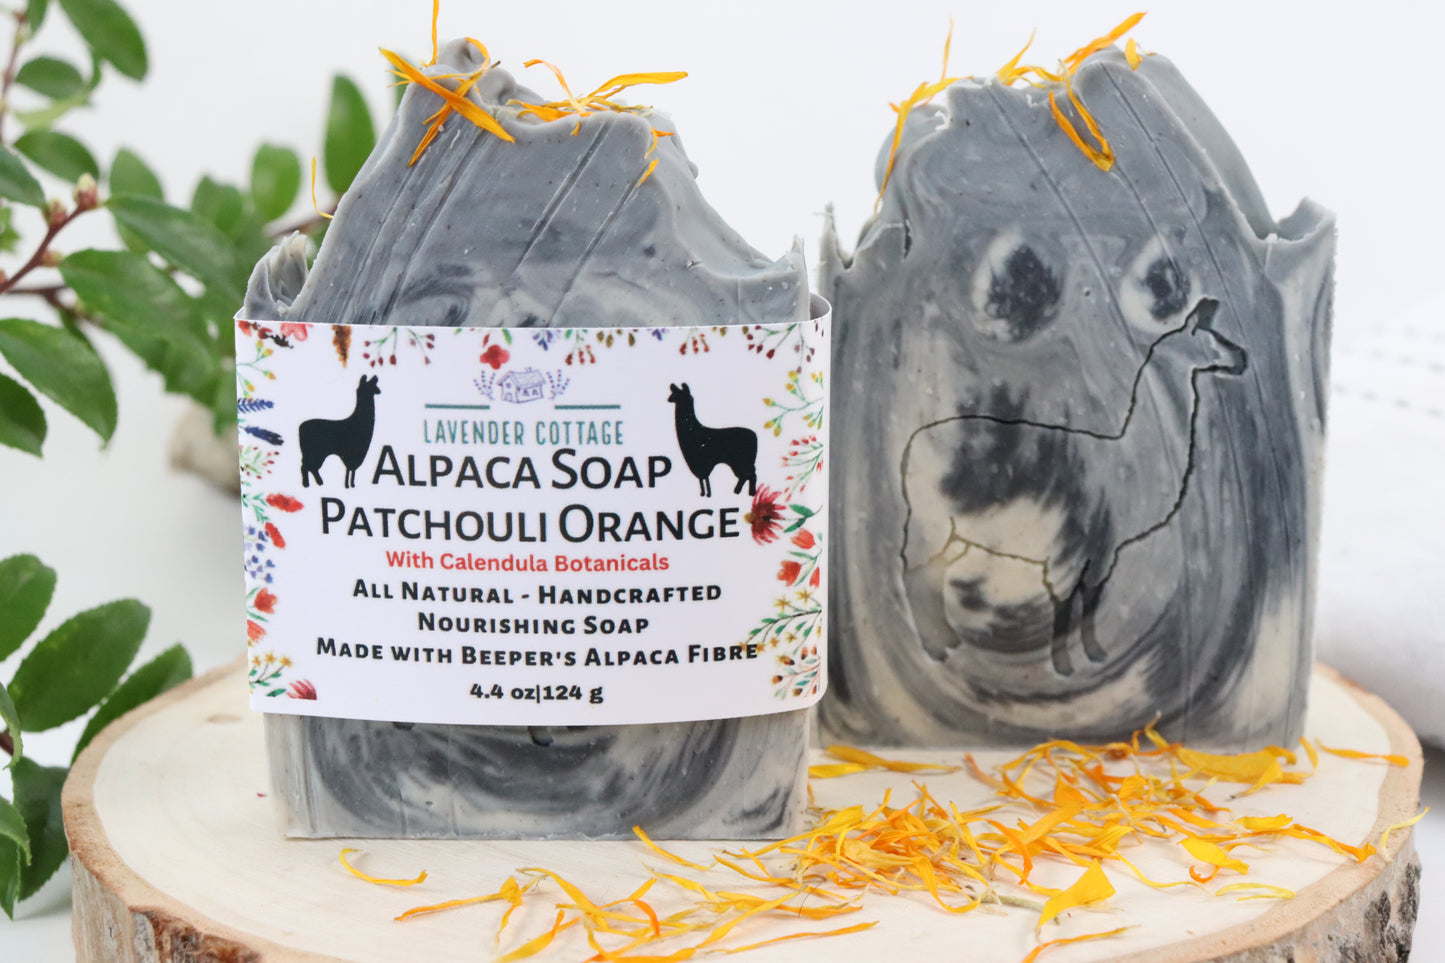 Alpaca Soaps - Wholesale 6 Soap Bars